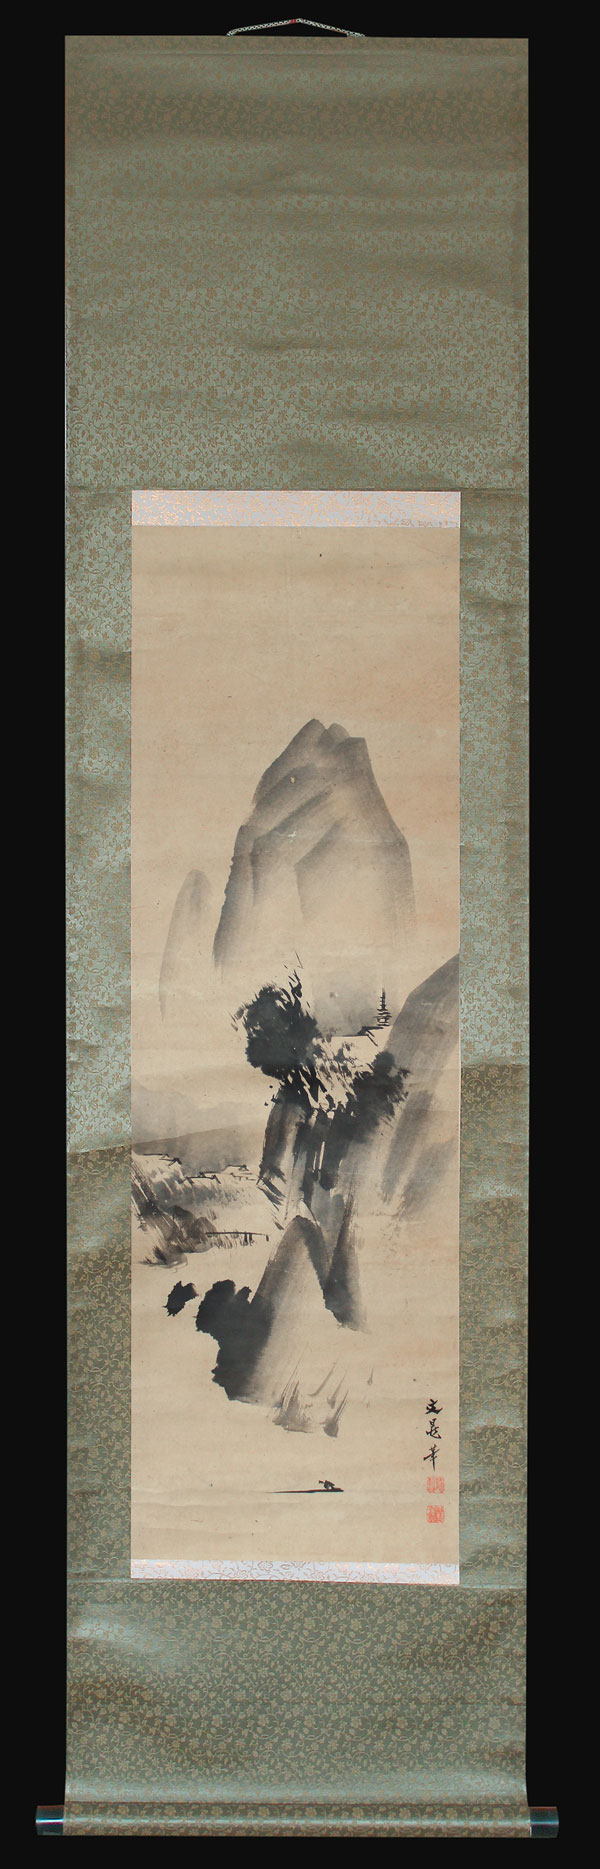 Bildrolle-Sansui-Landschaft-antik-Japan-KAK140A